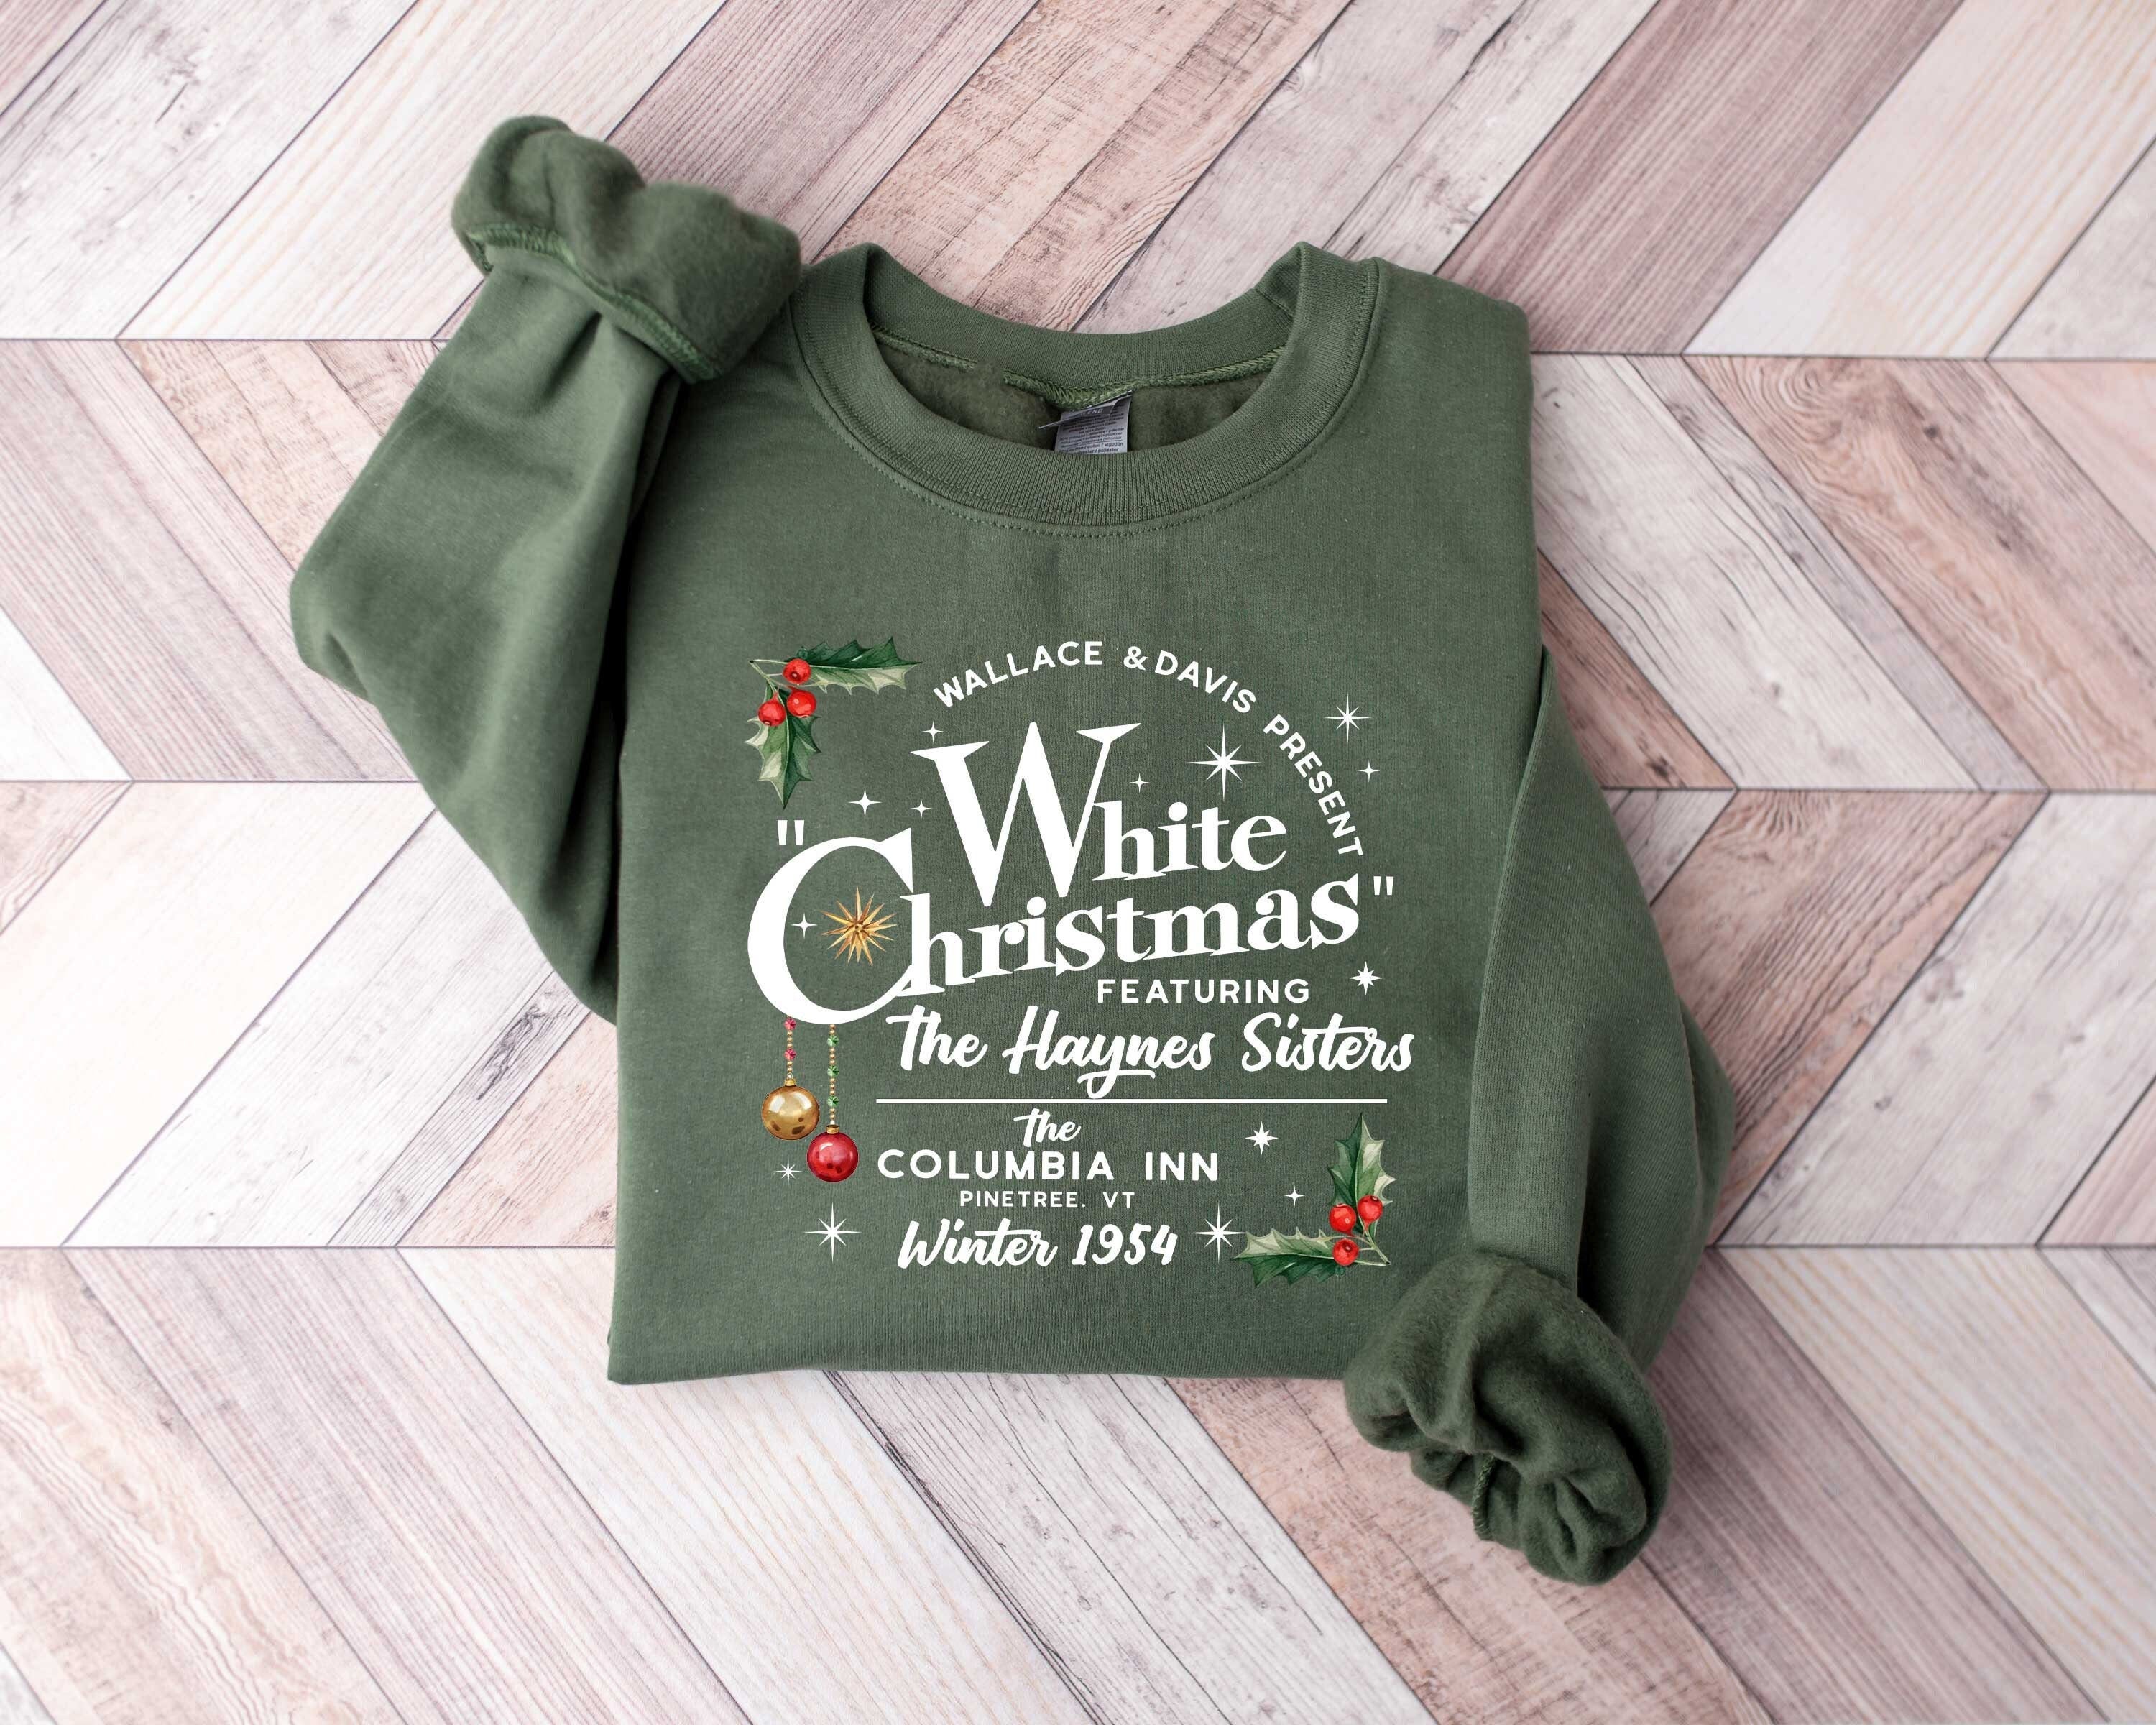 White Christmas Movie Shirt, Christmas Holiday Shirt, White Christmas Movie 1954 Shirt, Christmas Shirt, Wallace And Davis, Haynes Sisters